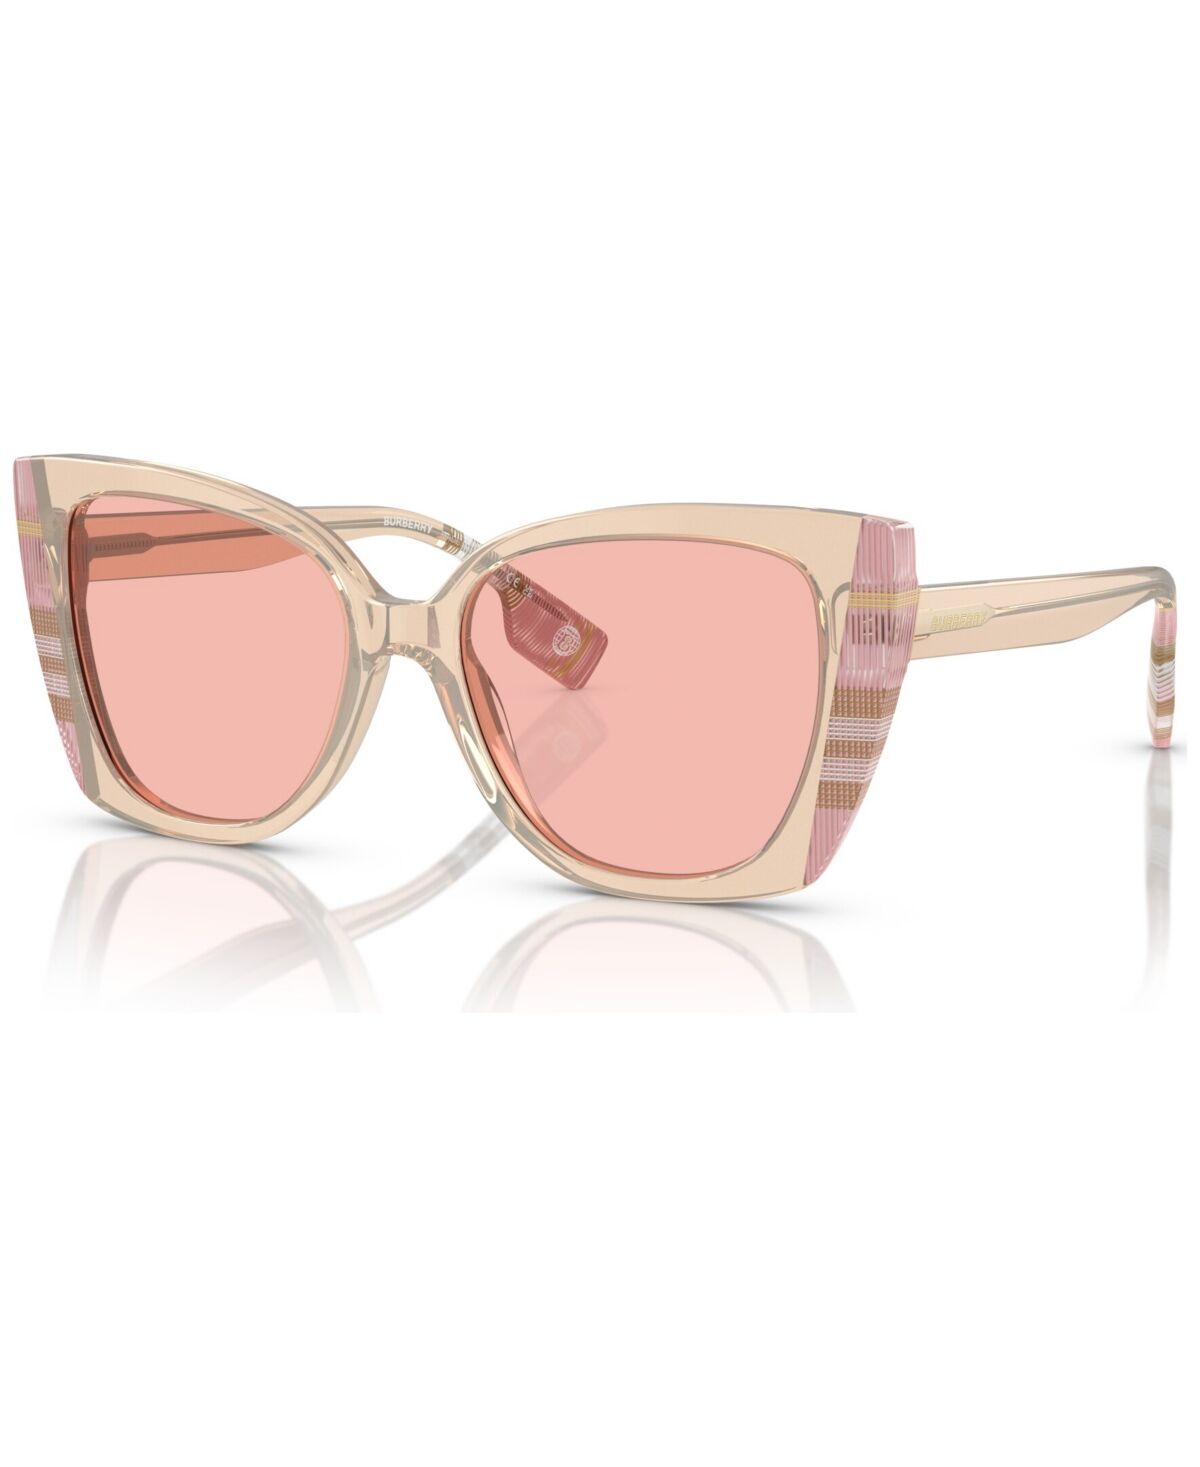 Burberry Women's Sunglasses, Meryl BE4393 - Pink, Check Pink